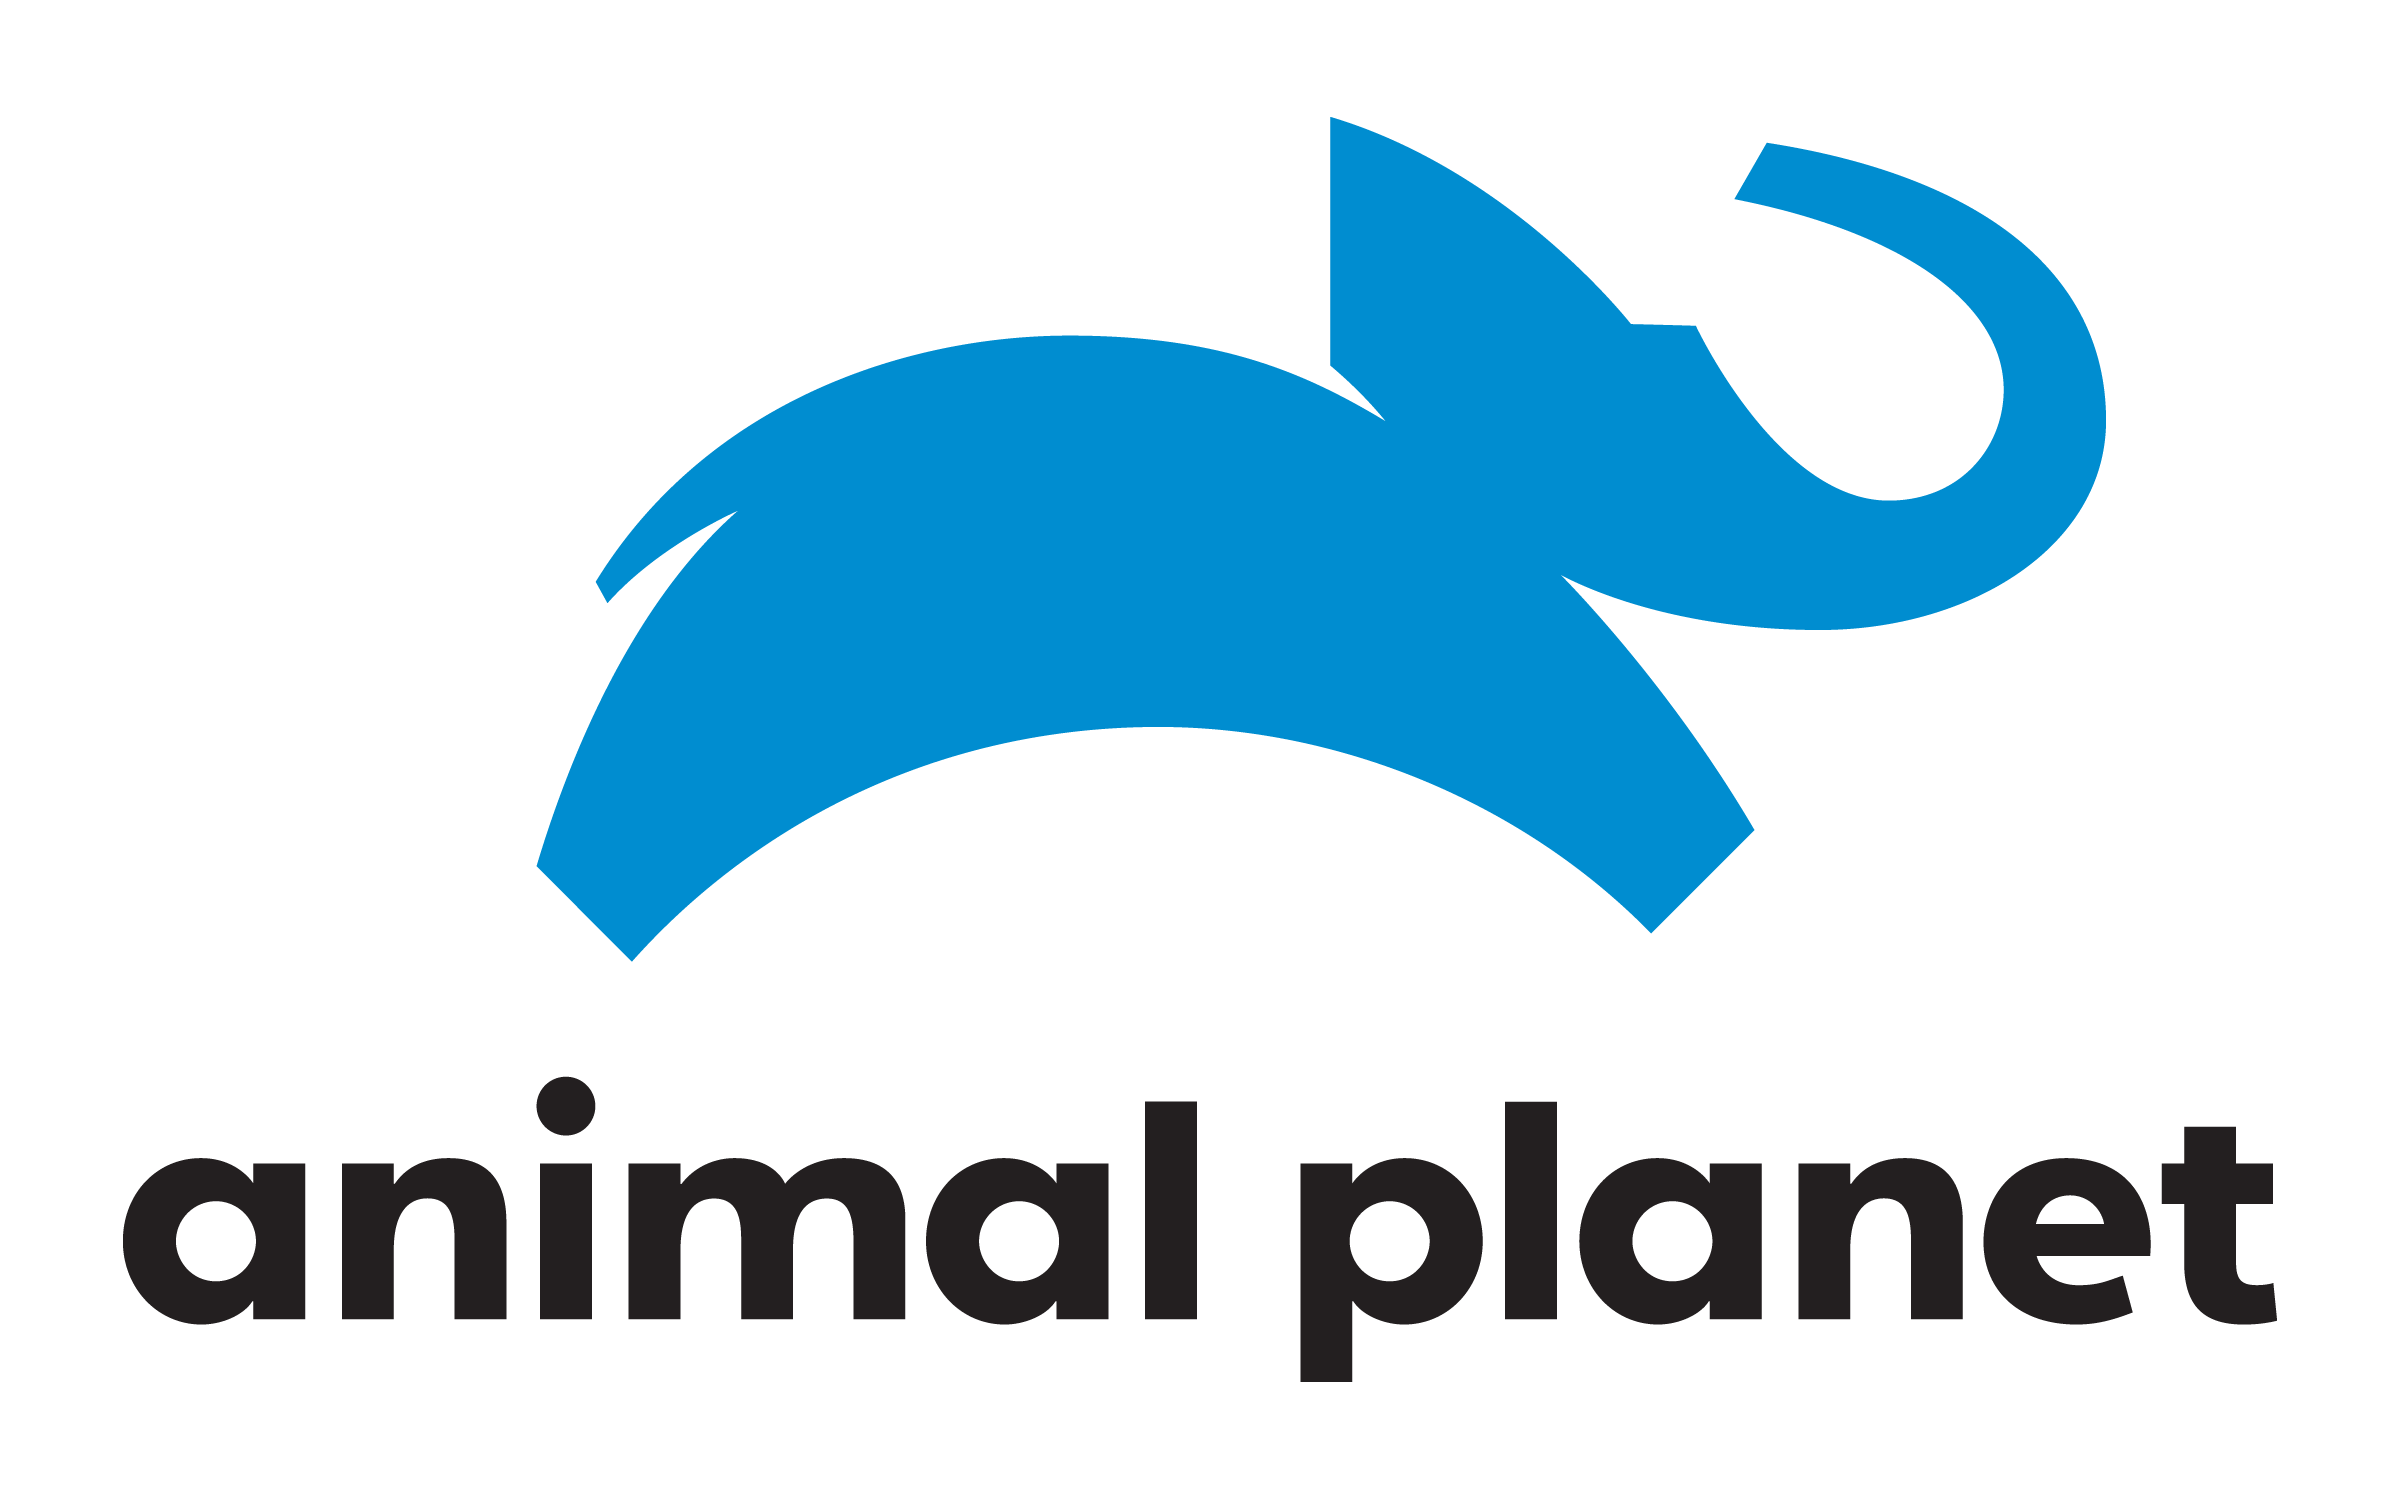 ANIMAL PLANET